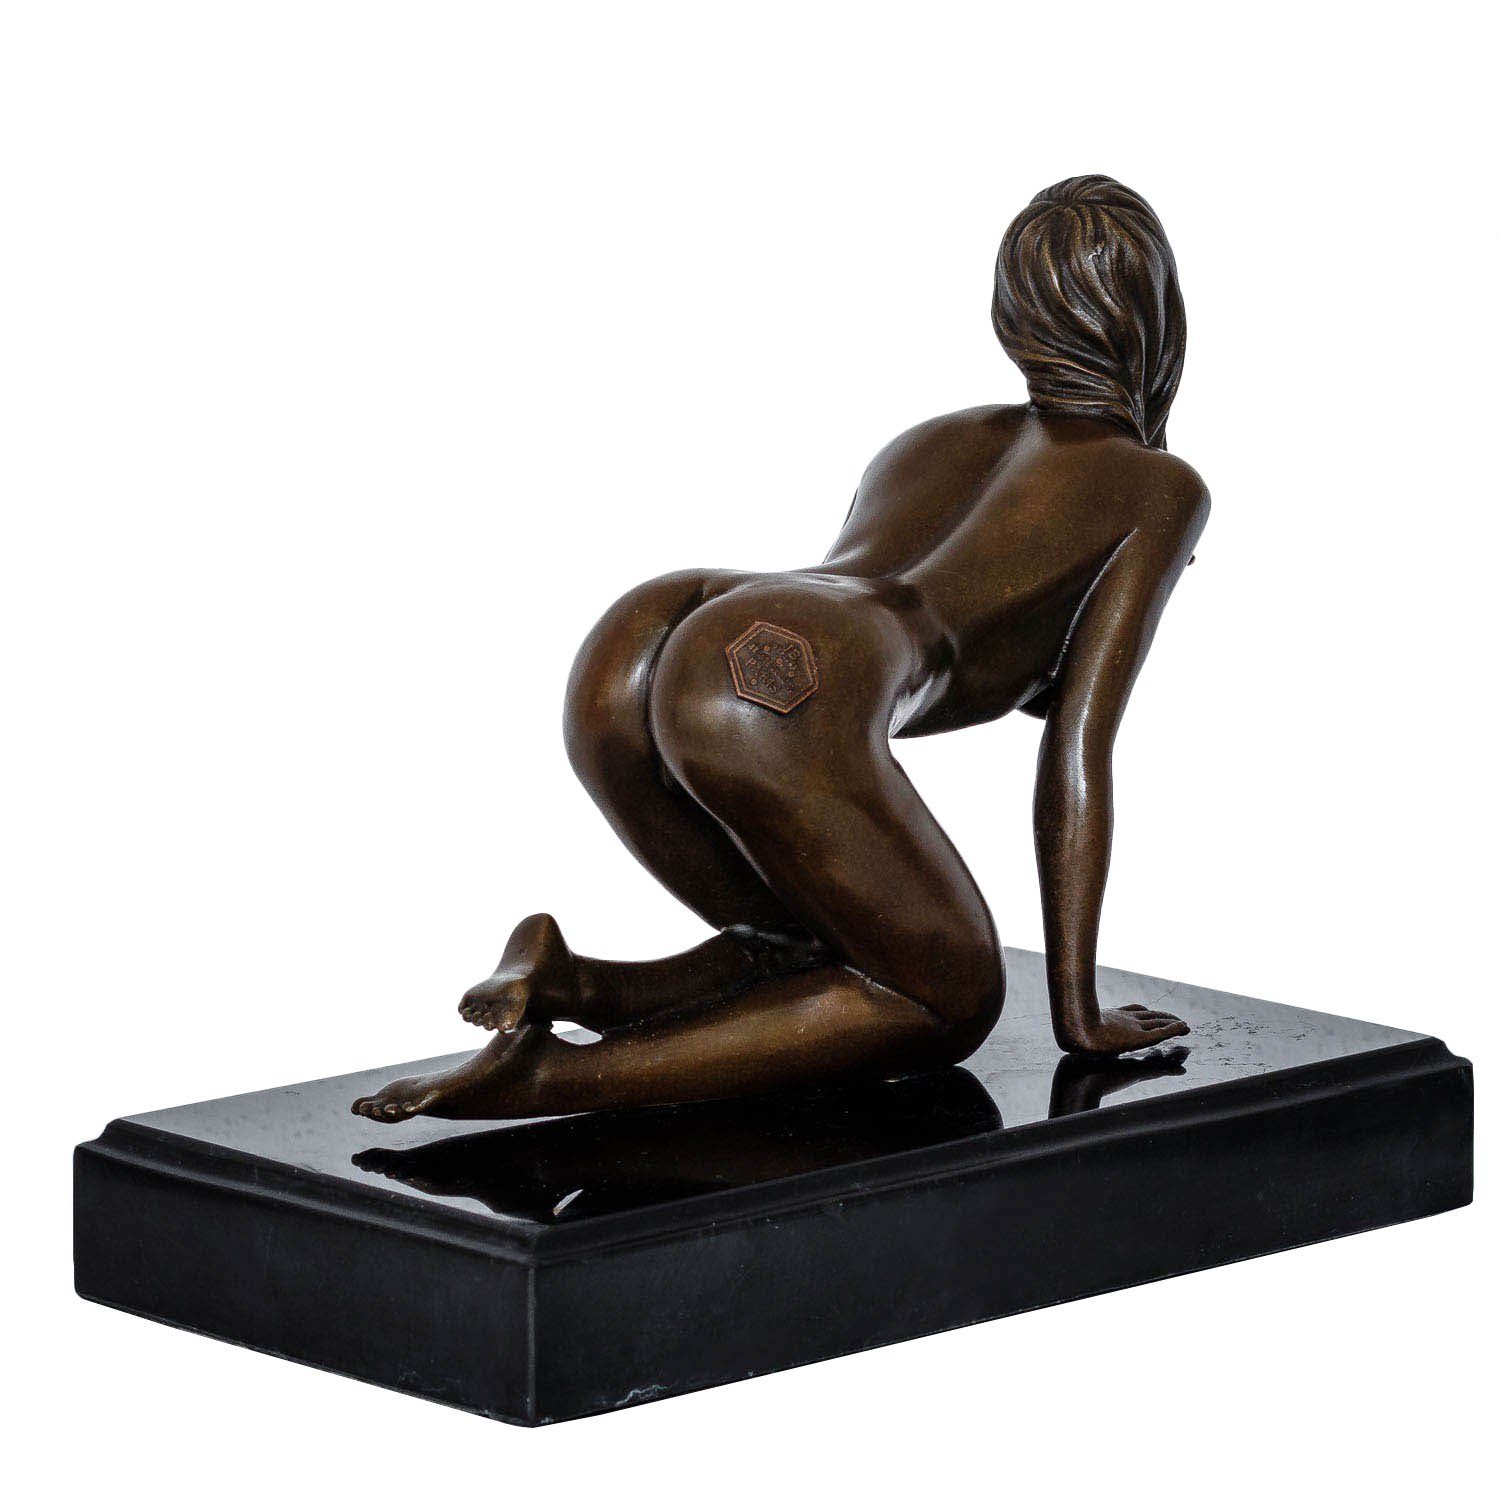 Aubaho Skulptur Bronzeskulptur Frau Erotik Kunst im Antik-Stil Bronze Figur 21cm